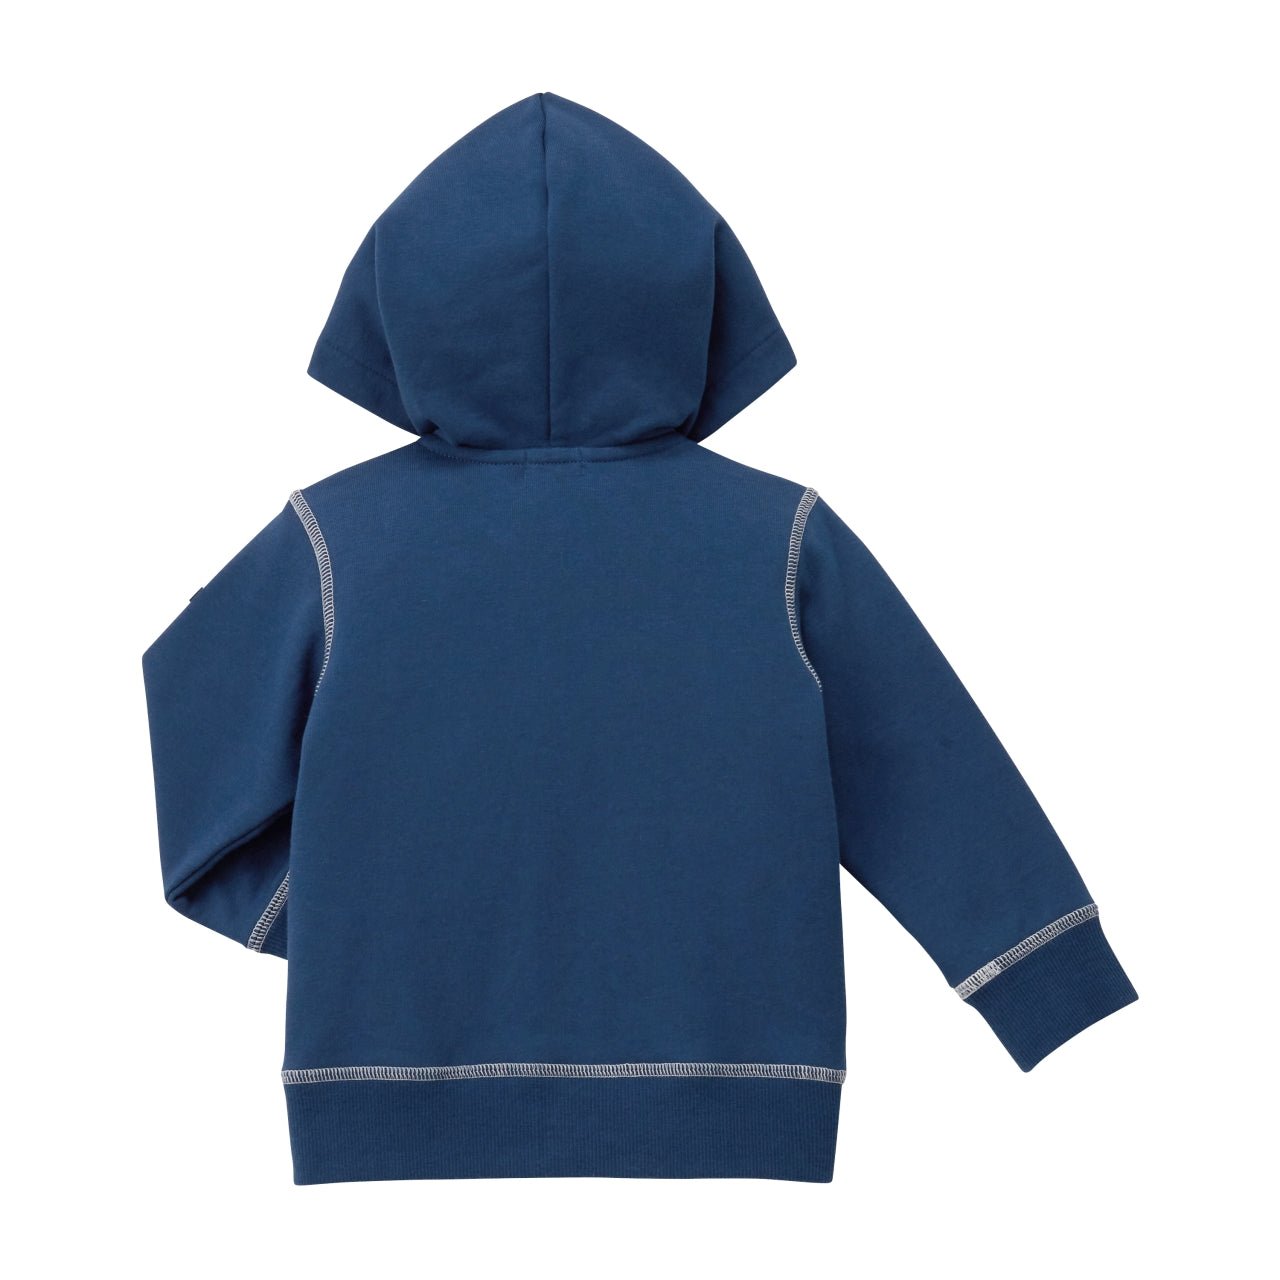 Standard DOUBLE_B Zip-up Hoodie in Marine Blue (UV Protection) - 60-3707-571-03-90